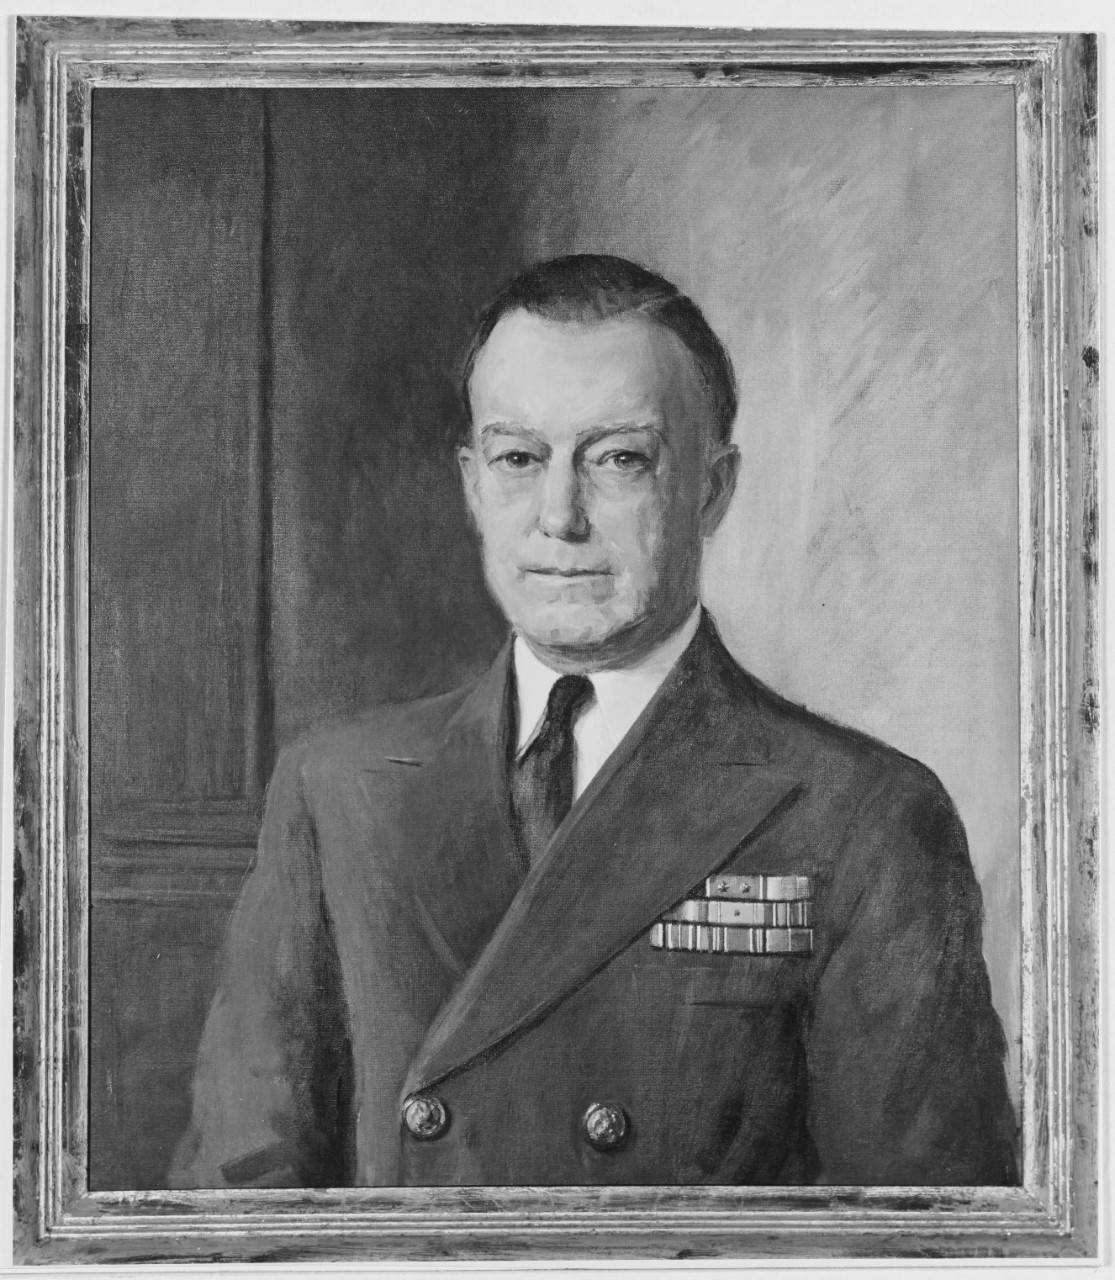 Rear Admiral Thorwald A. Solberg, USN